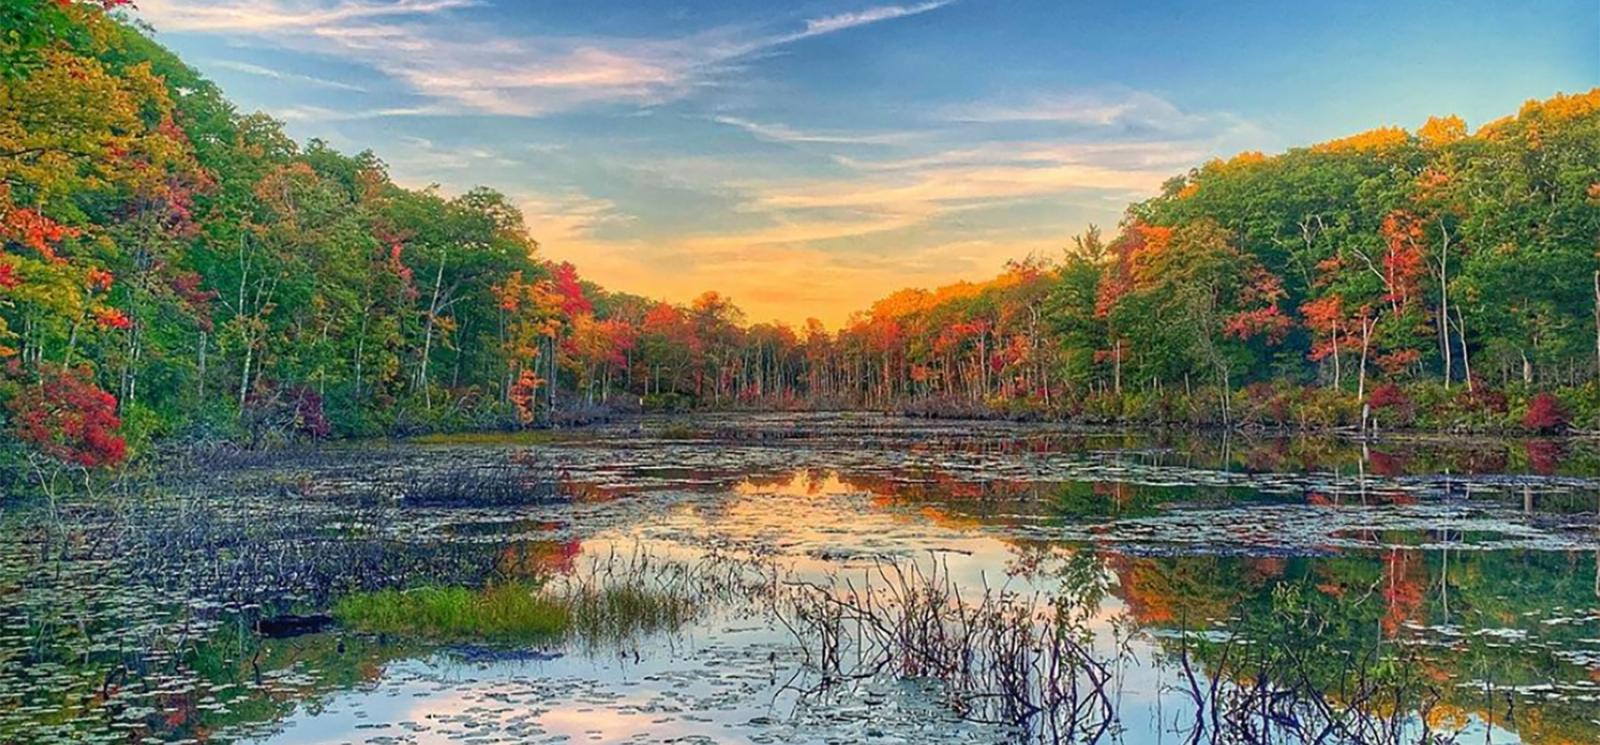 Water reflecting fall trees and sky (Instagram@marklark13)